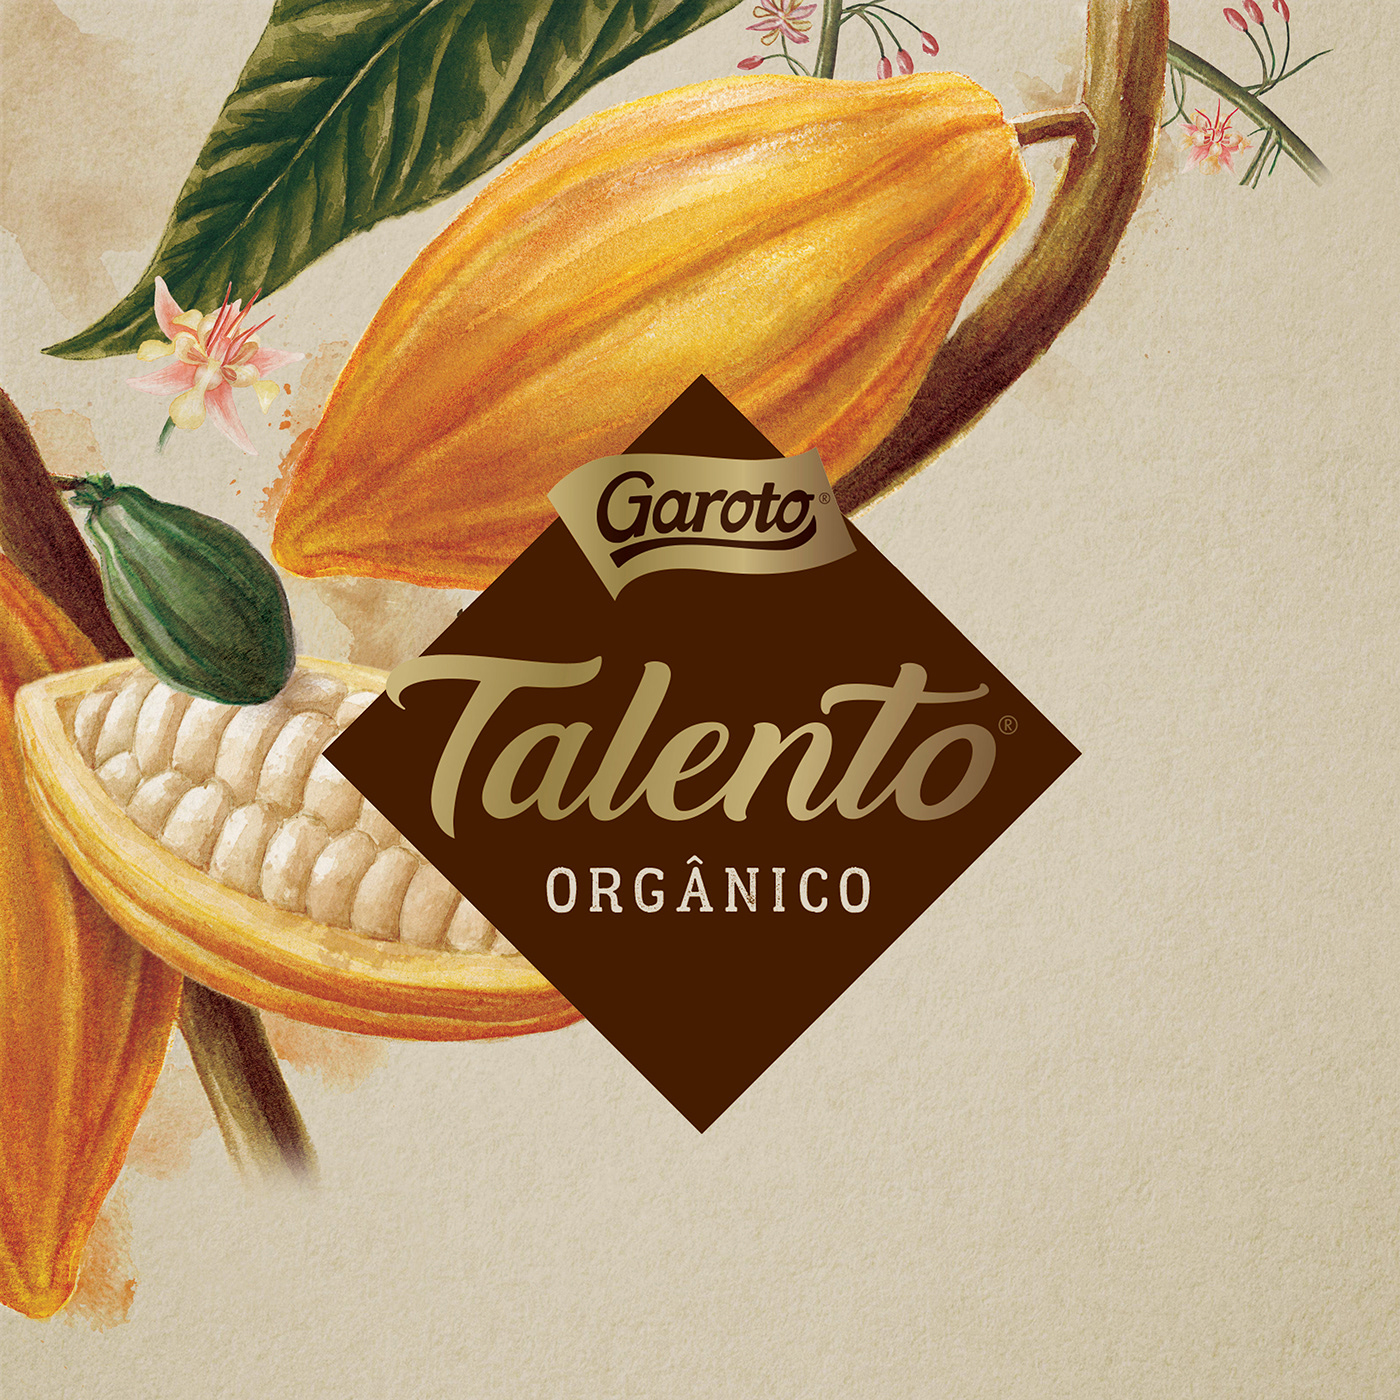 garoto talento chocolate future brand monstro studio nestle